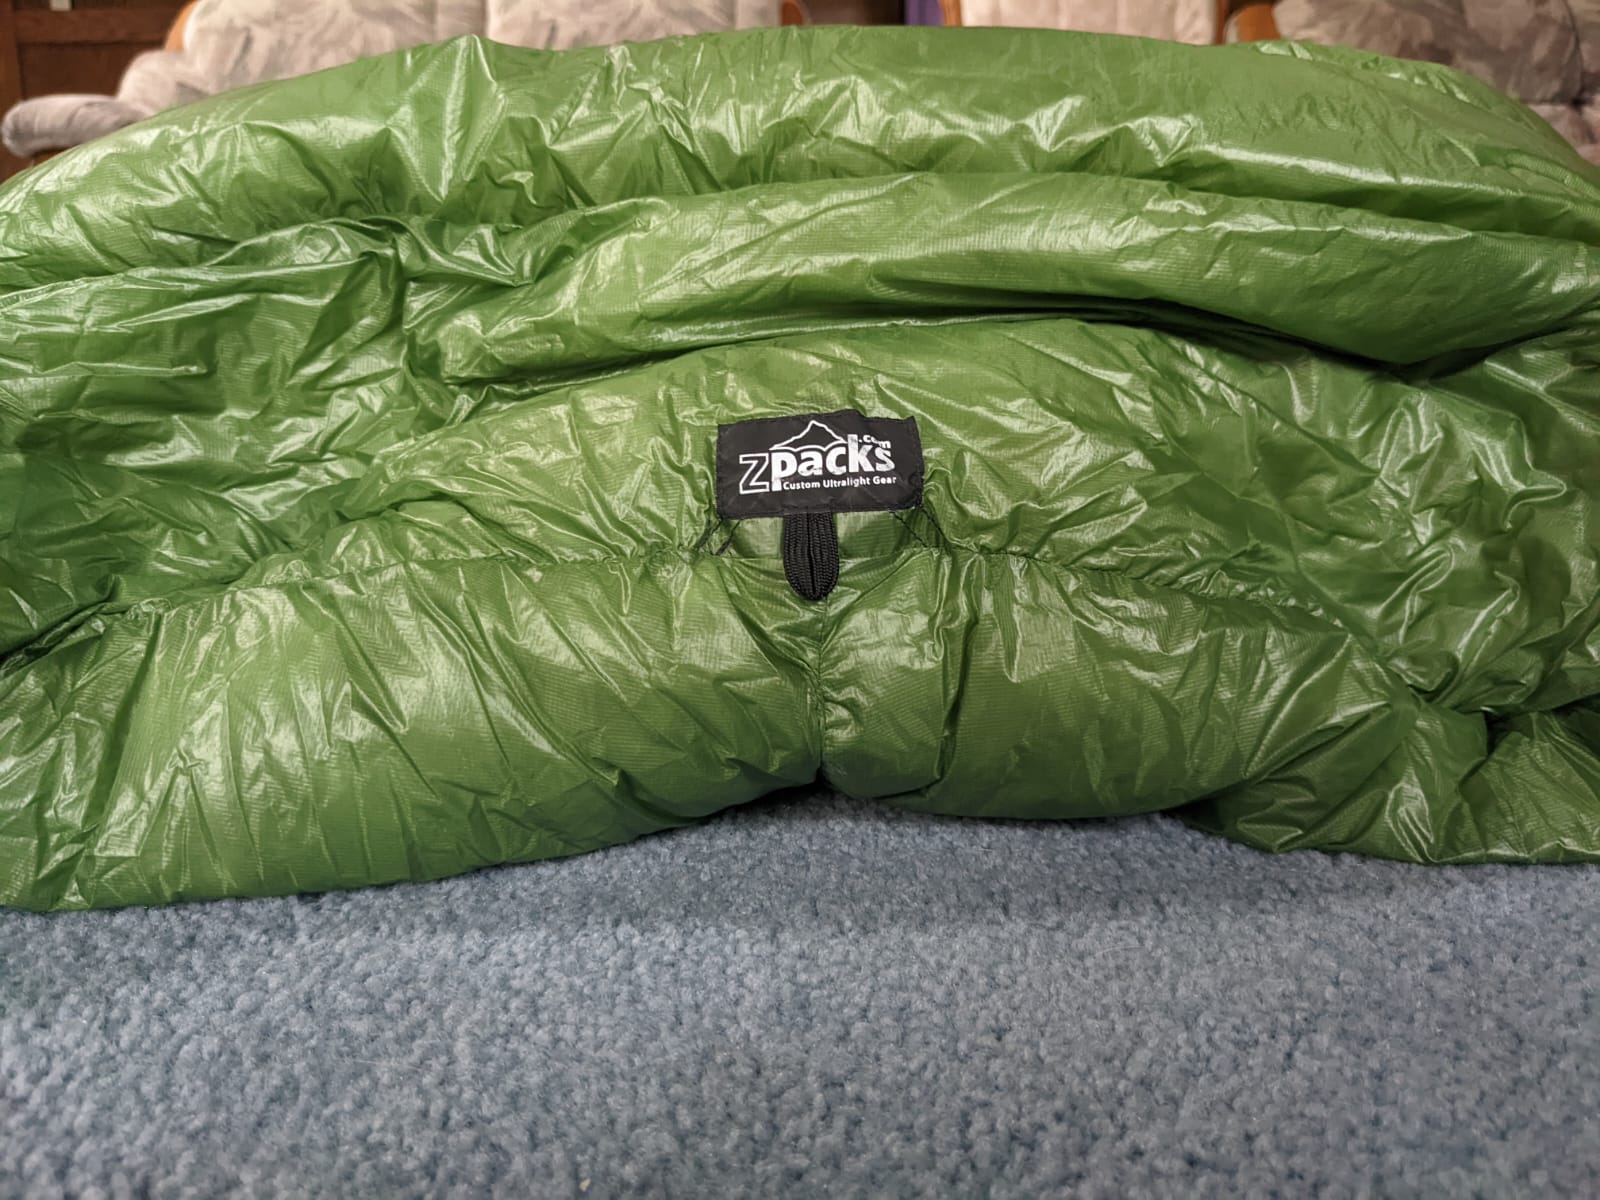 Zpacks 20F degree twin quilt sleeping bag 6 foot length - Backpacking Light